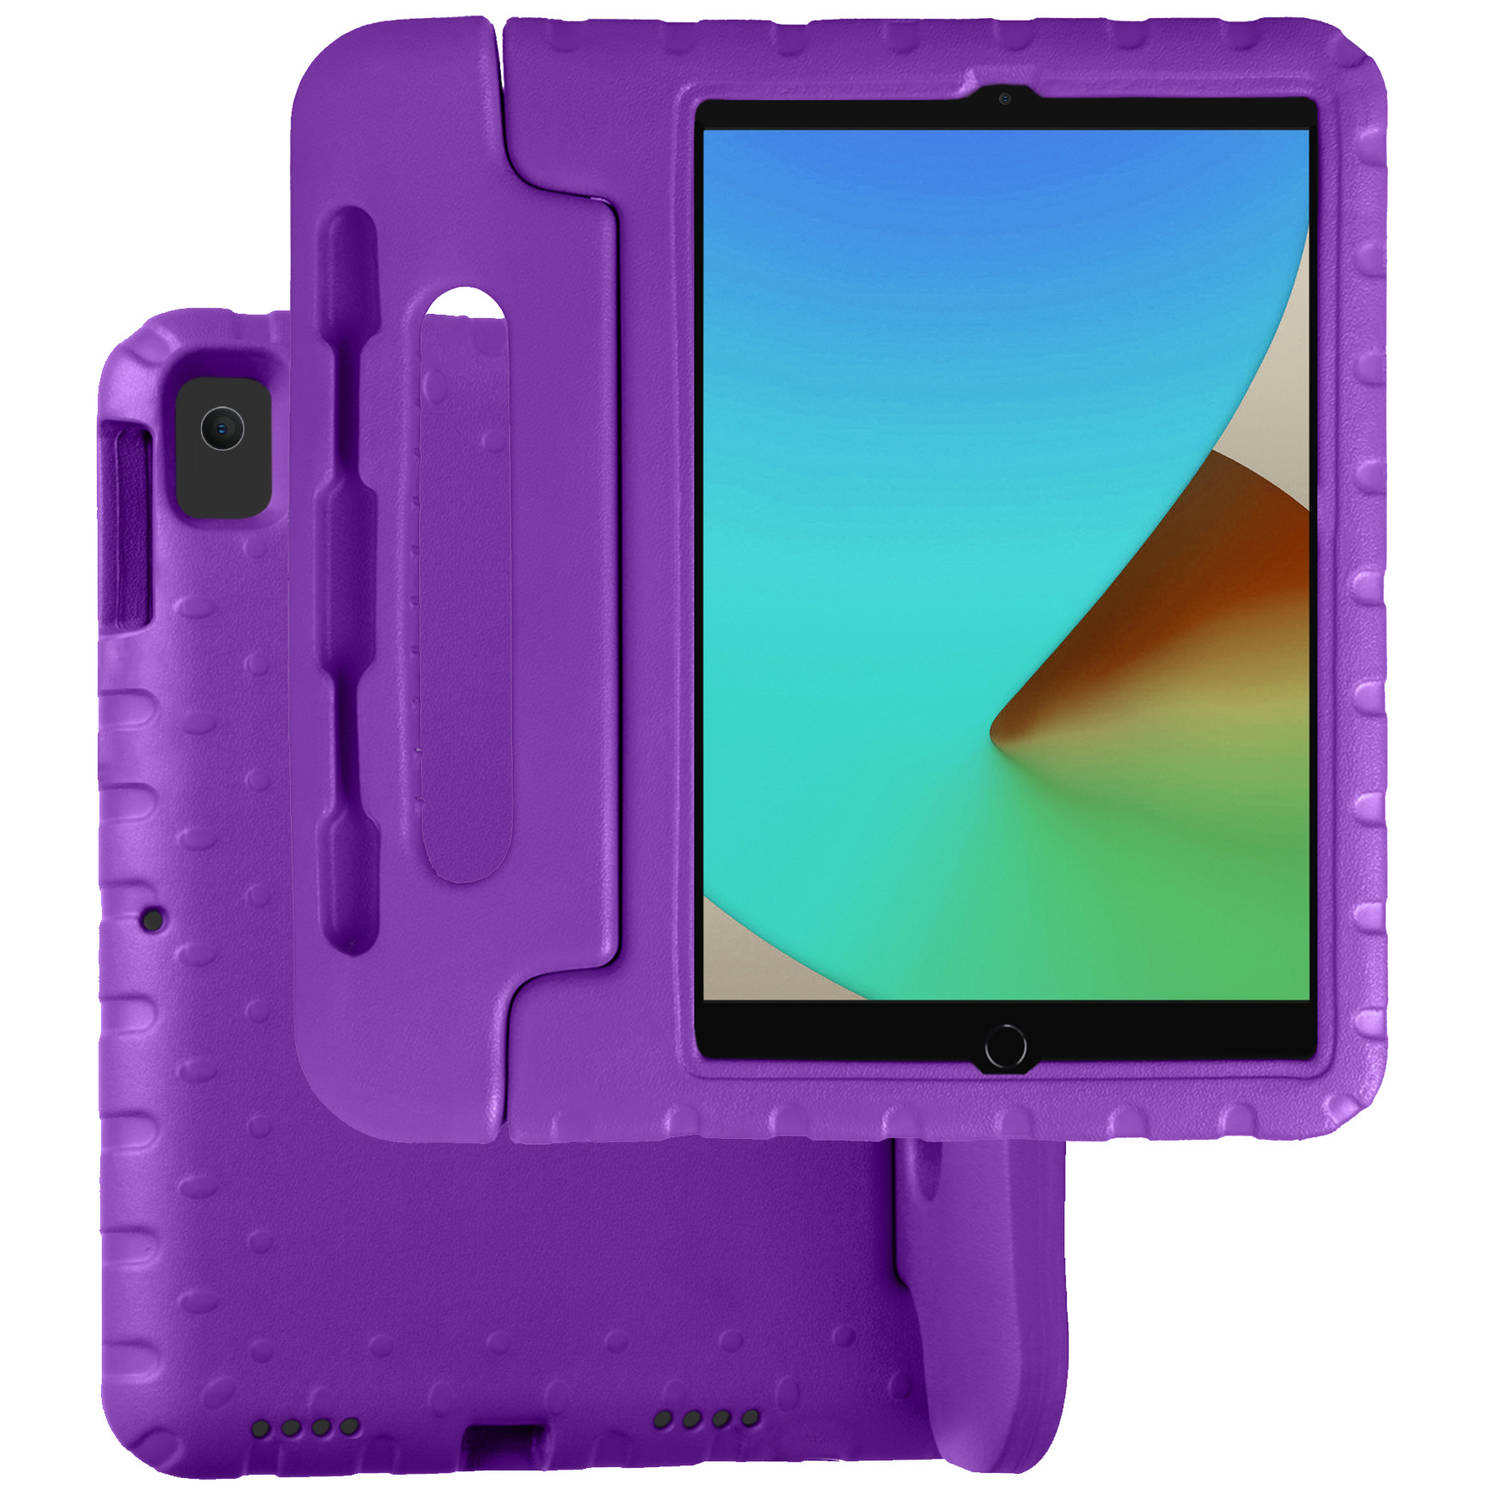 Basey iPad 10.2 2019 Hoesje Kinder Hoes Shockproof Cover - Kindvriendelijke iPad 10.2 2019 Hoes Kids Case - Paars